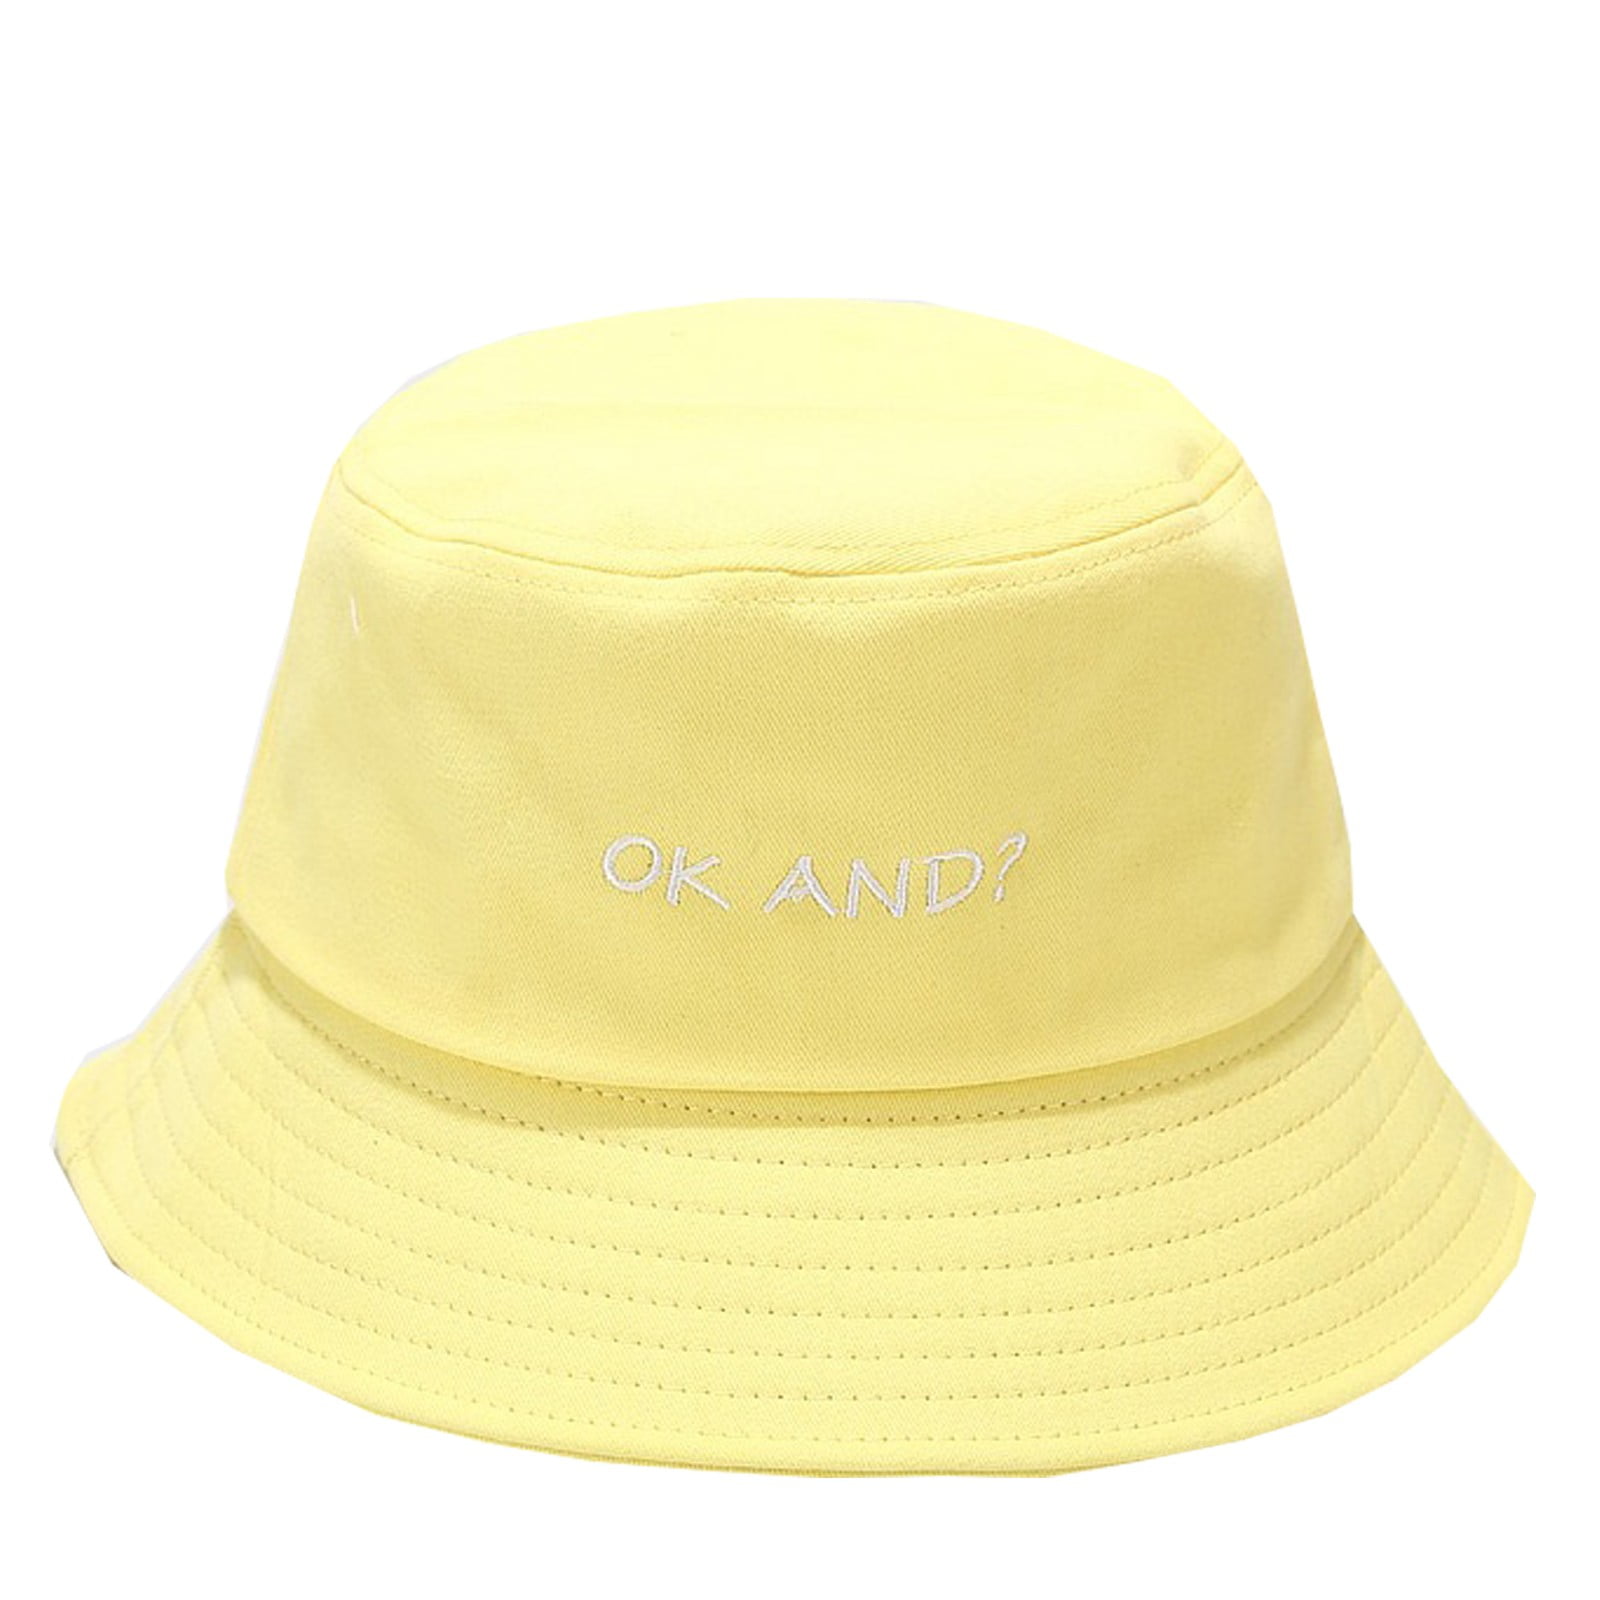 Weaiximiung Women's Fashion Printing Sunshade Fisherman's Hat Basin Hat Outdoor Bucket Hat Bucket Hats for Women Denim Yellow, Size: One Size